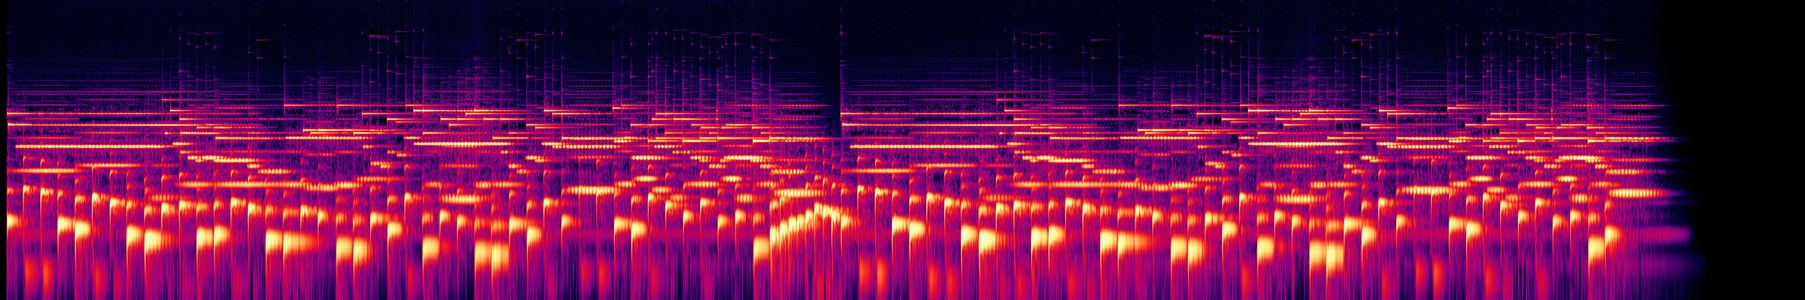 Air - Spectrogram.jpg